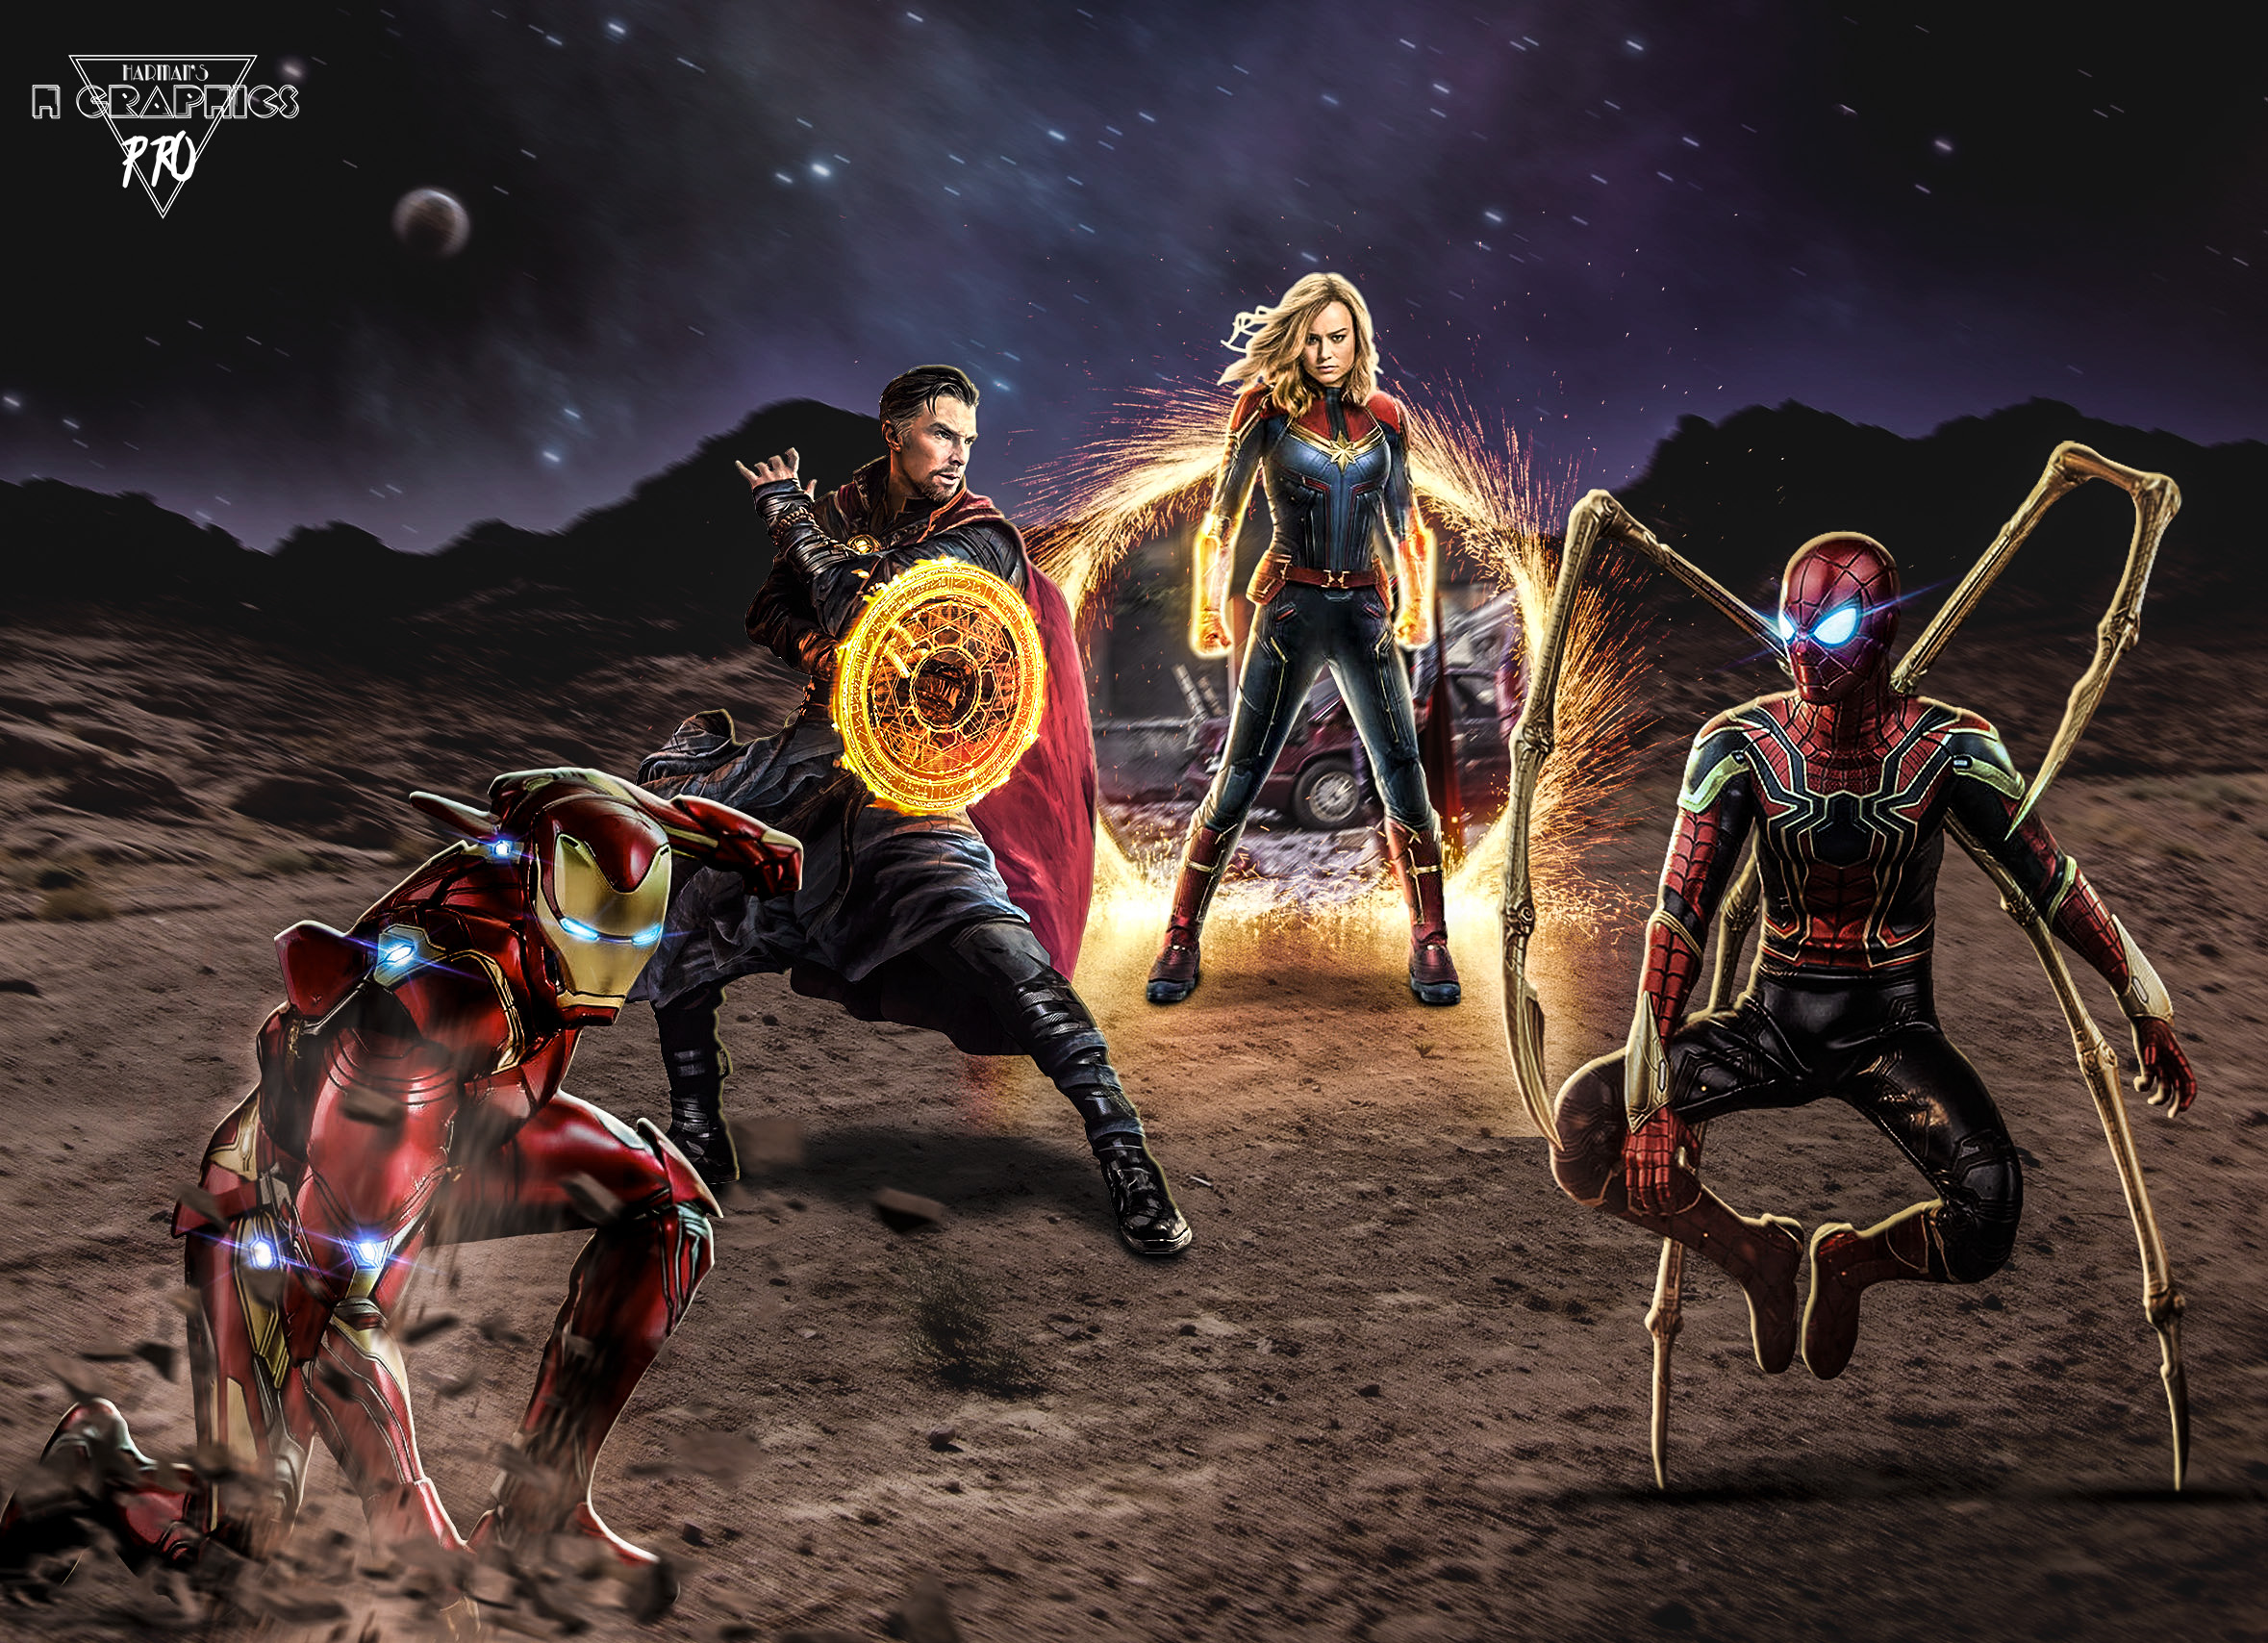 Avengers End Game 2019 Art, HD Superheroes, 4k Wallpapers 